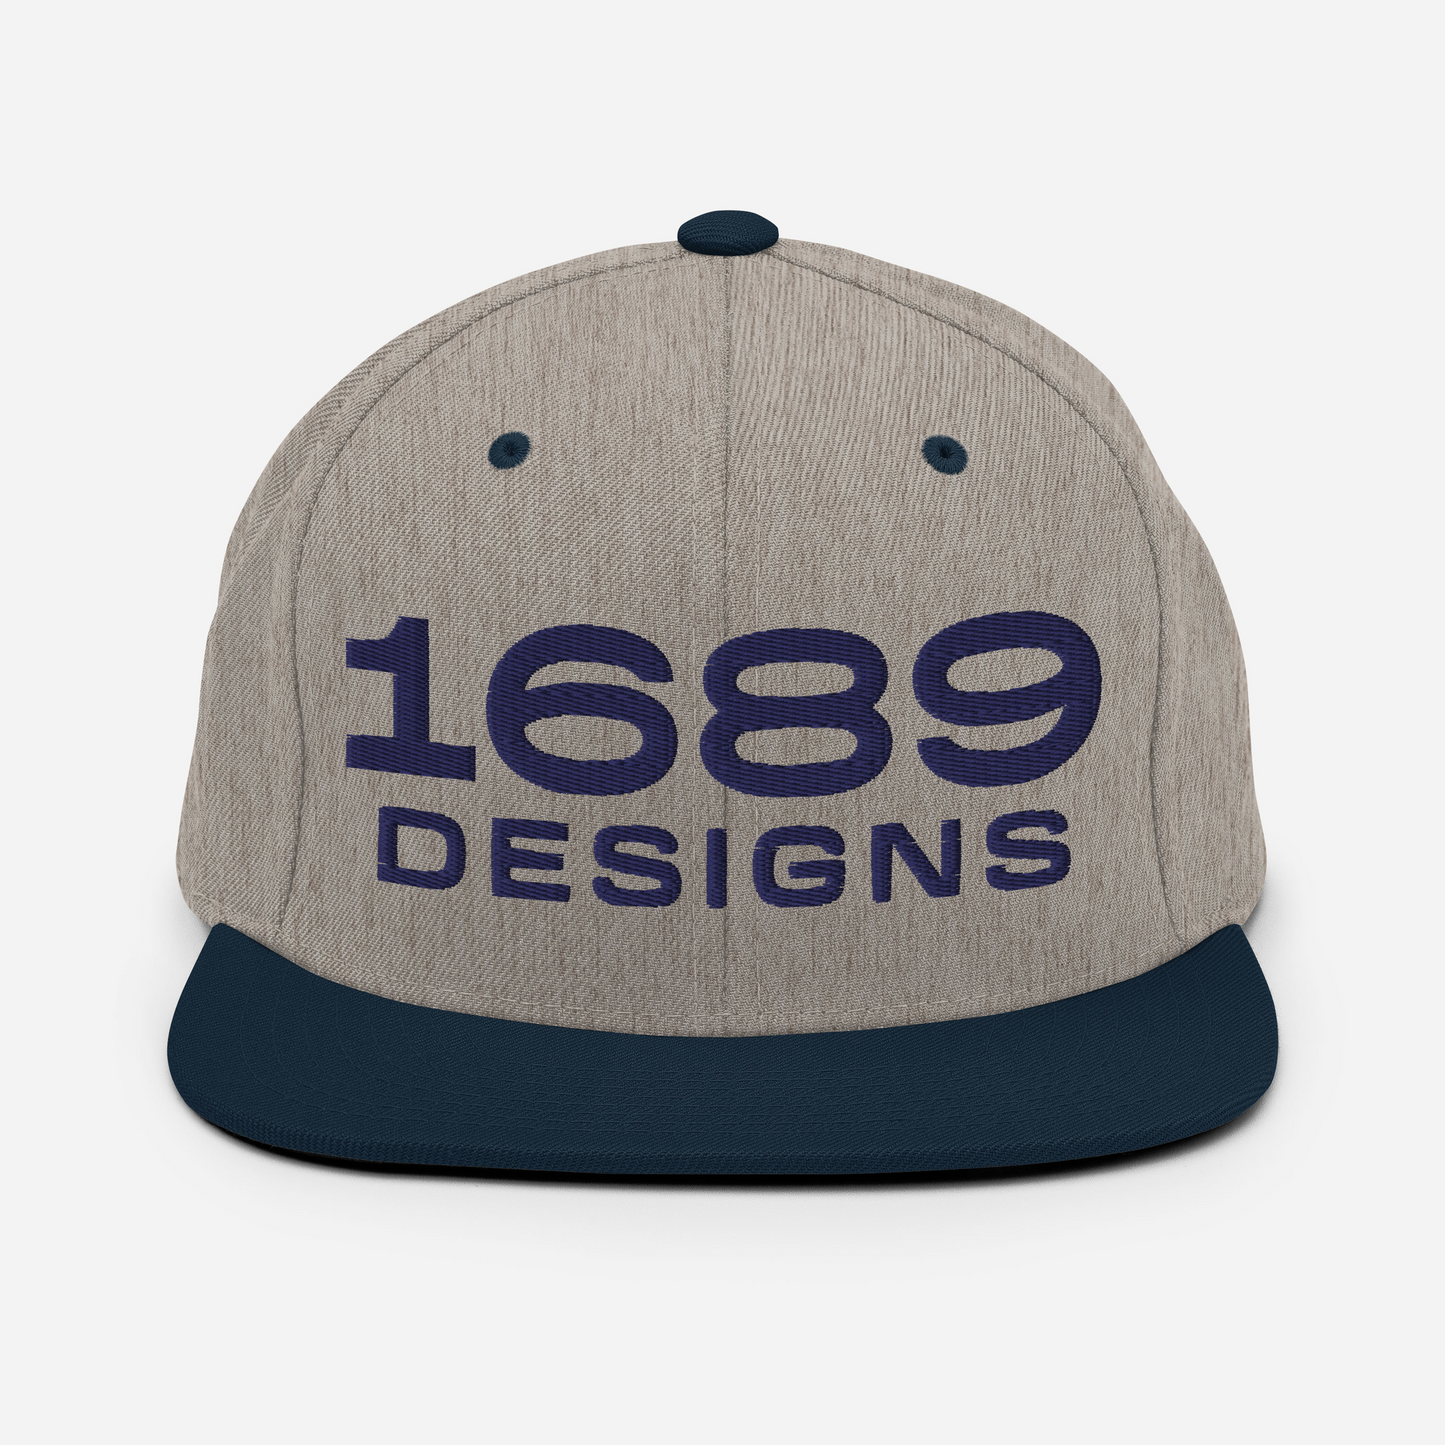 1689 Designs Snapback Hat